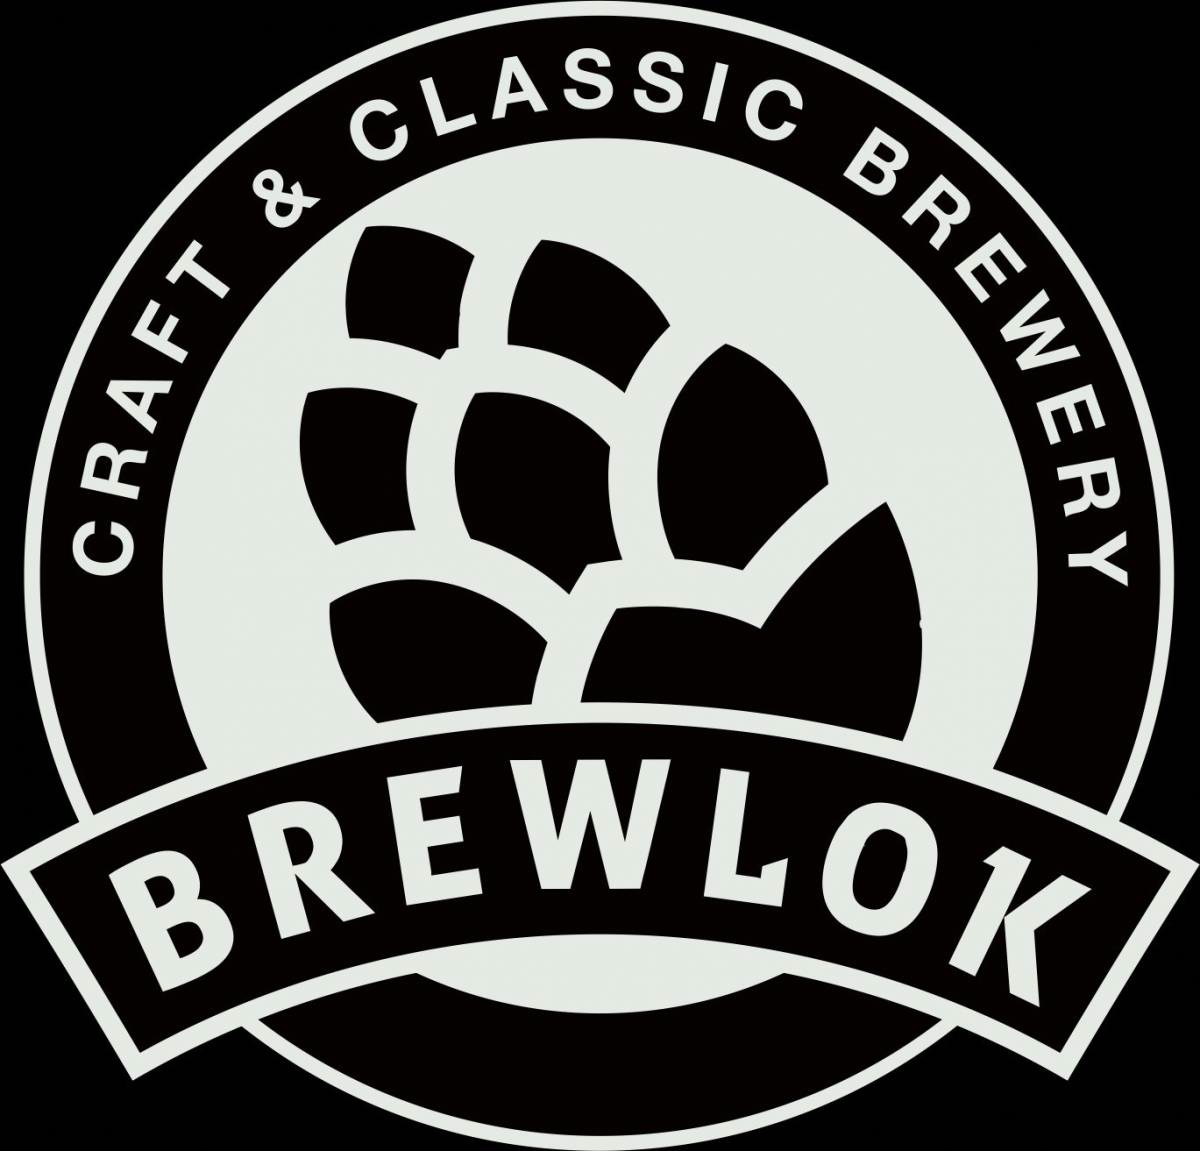 Brewlok logo